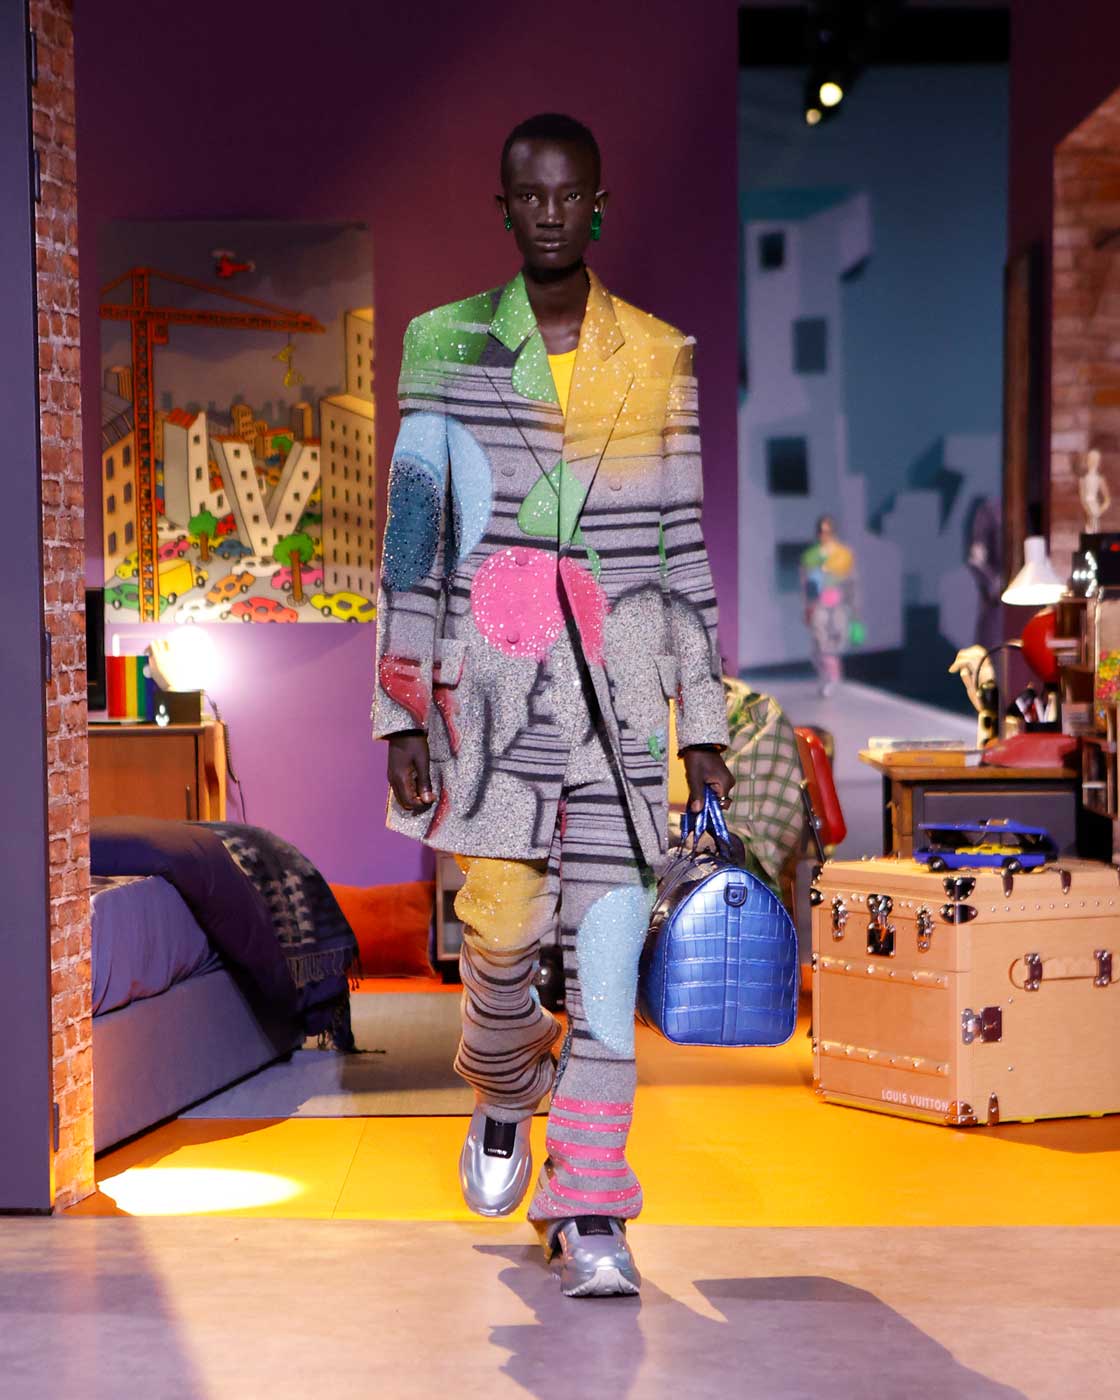 Louis Vuitton: a super surprise in choosing KidSuper to co-create